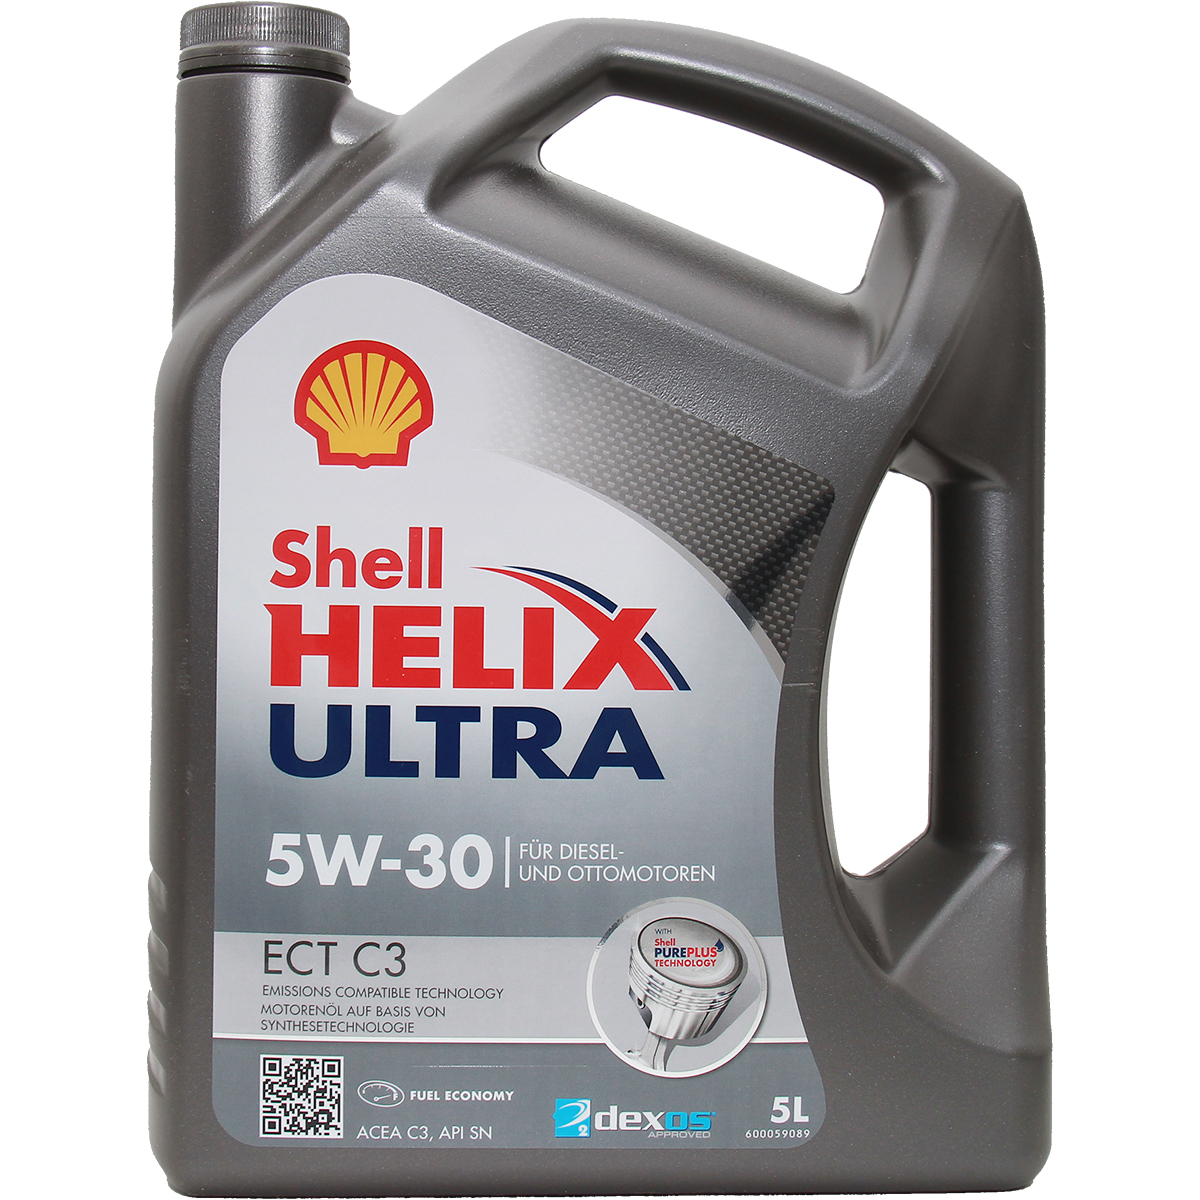 Shell Helix Ultra ECT C3 5W-30 5 Liter